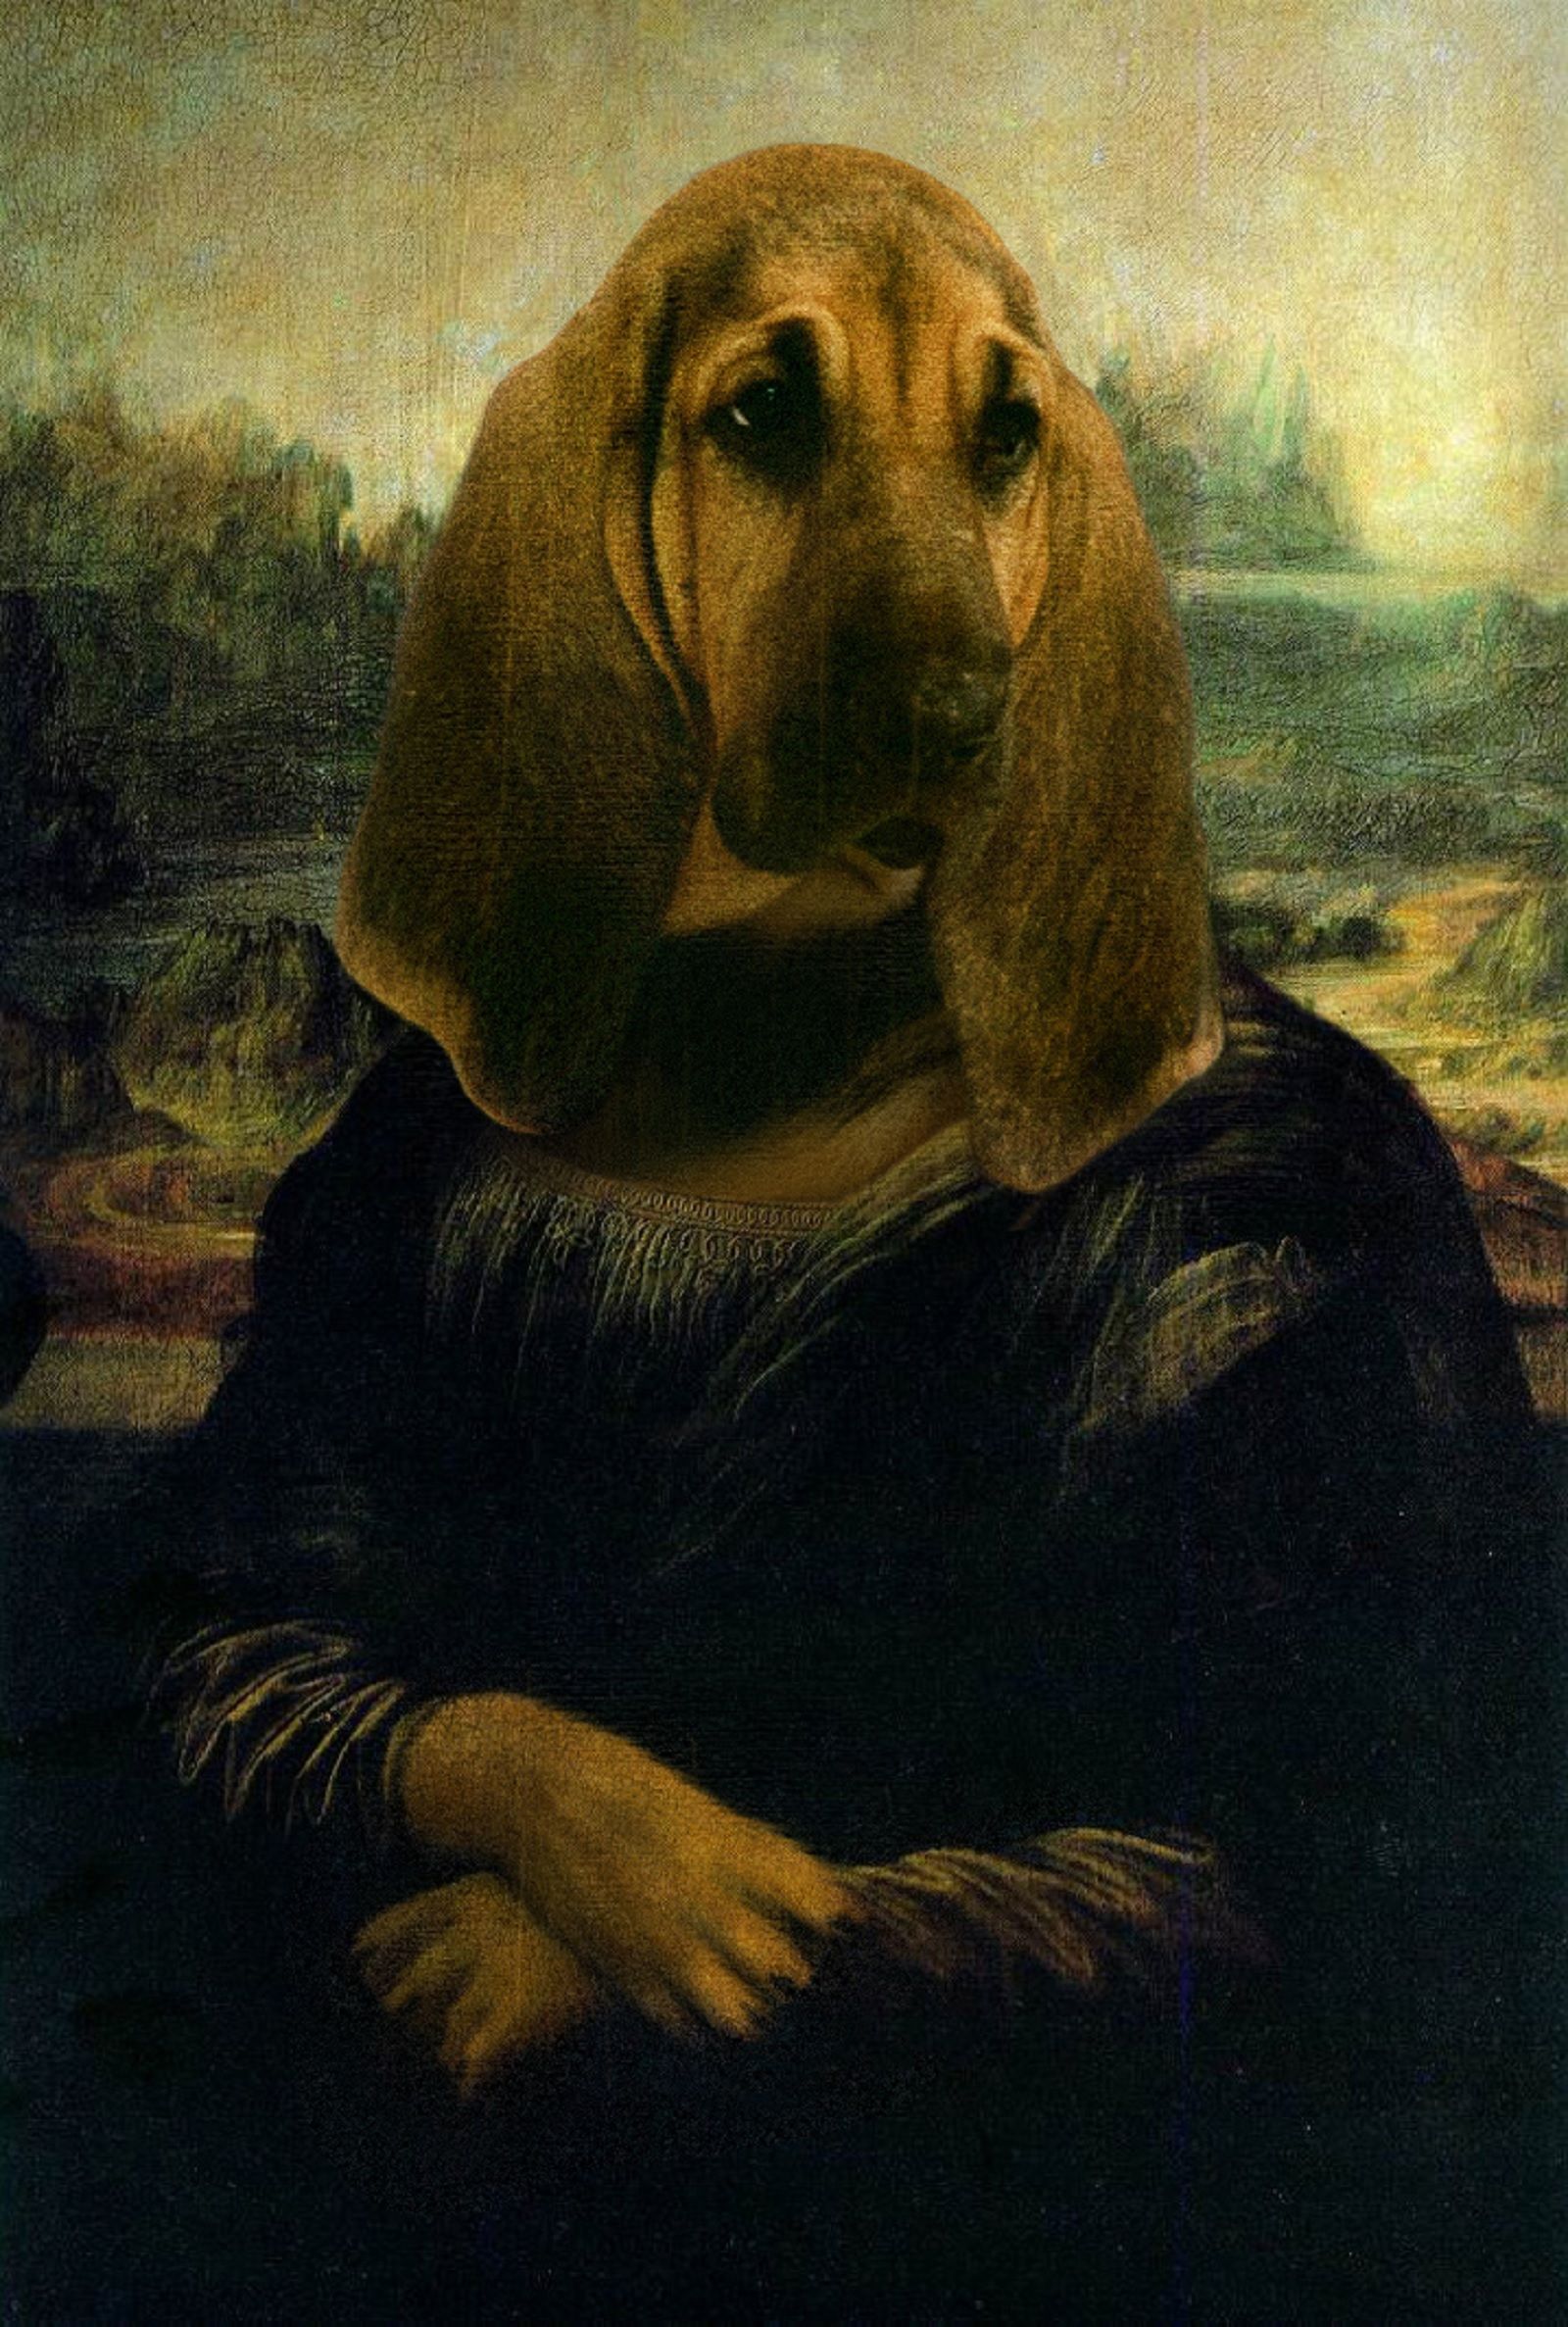 amusing images of animals photoshopped into renaissance paintings photo 30